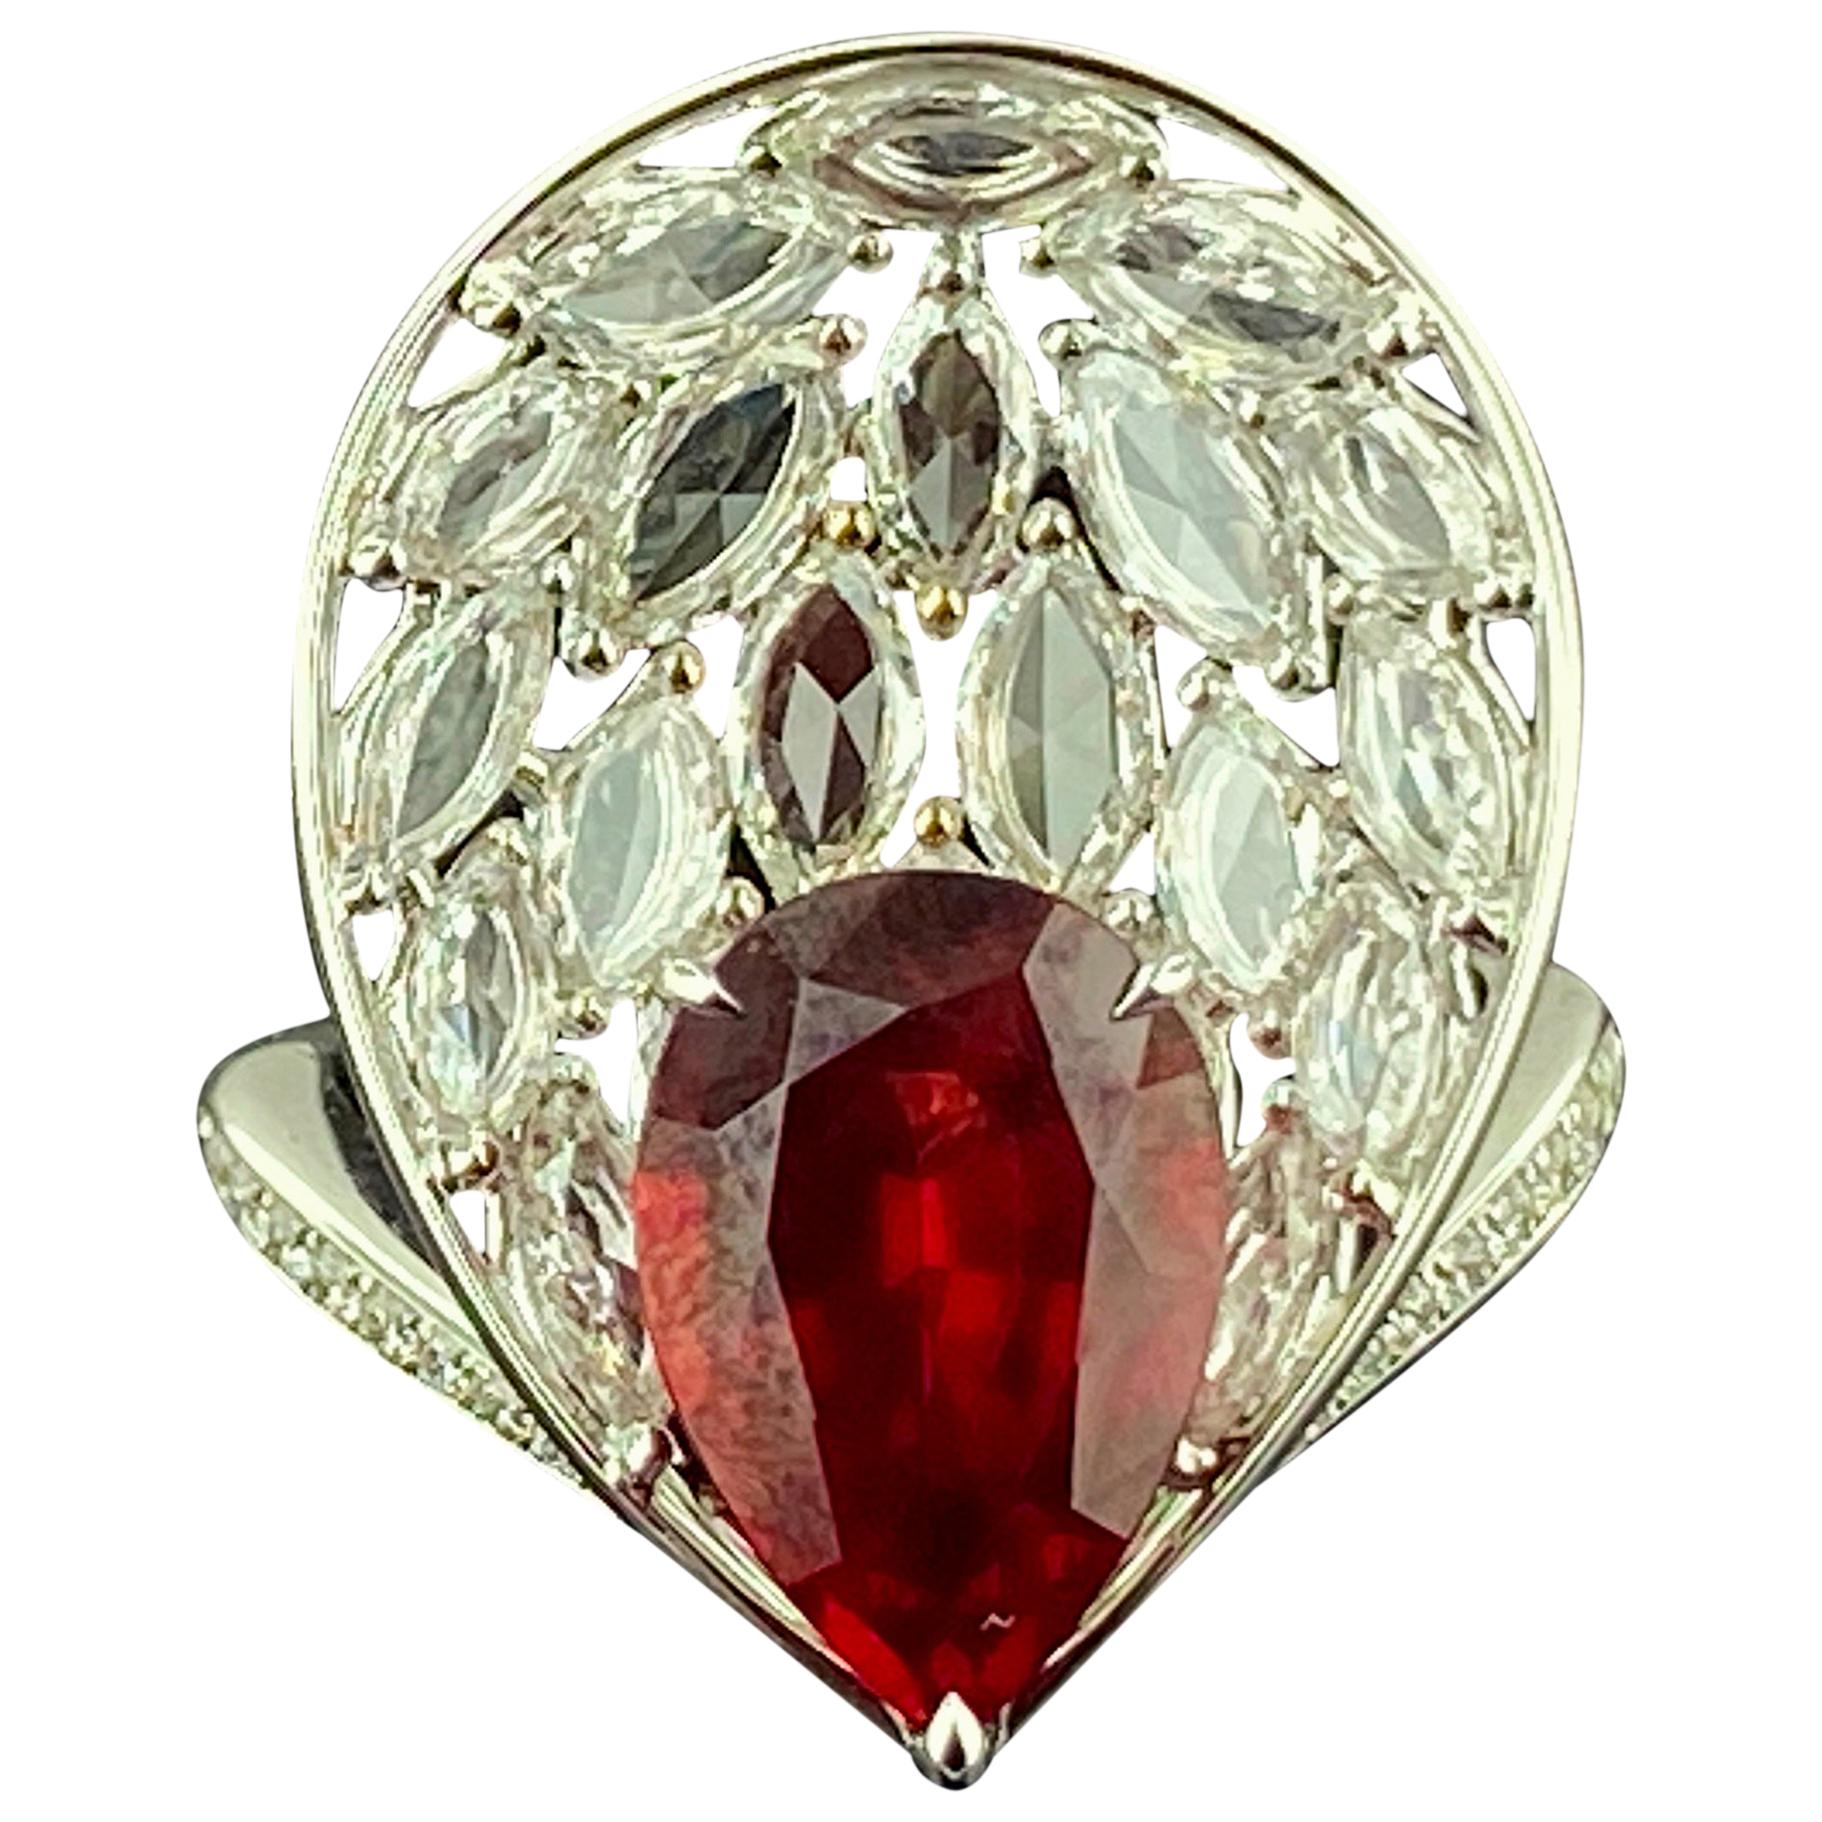 18 Karat White Gold Ruby and Diamond Ring